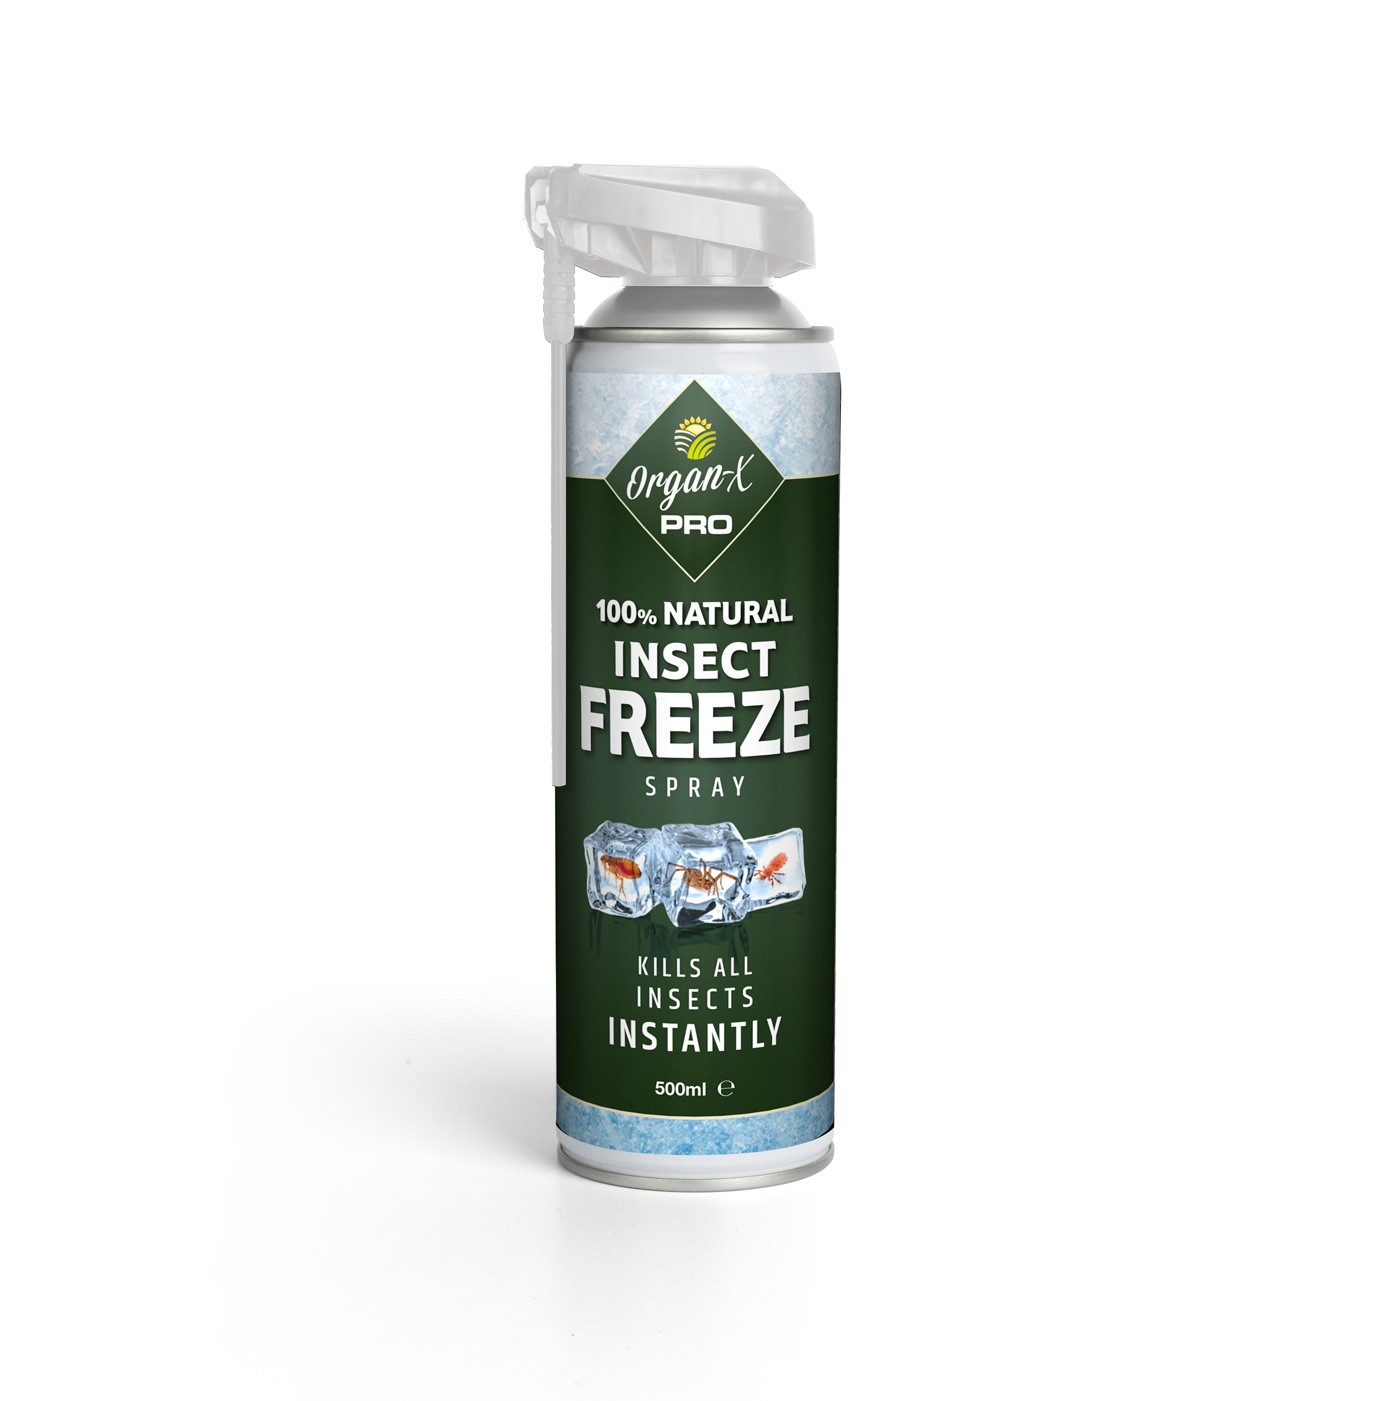 Organ-X Pro Freeze Spray